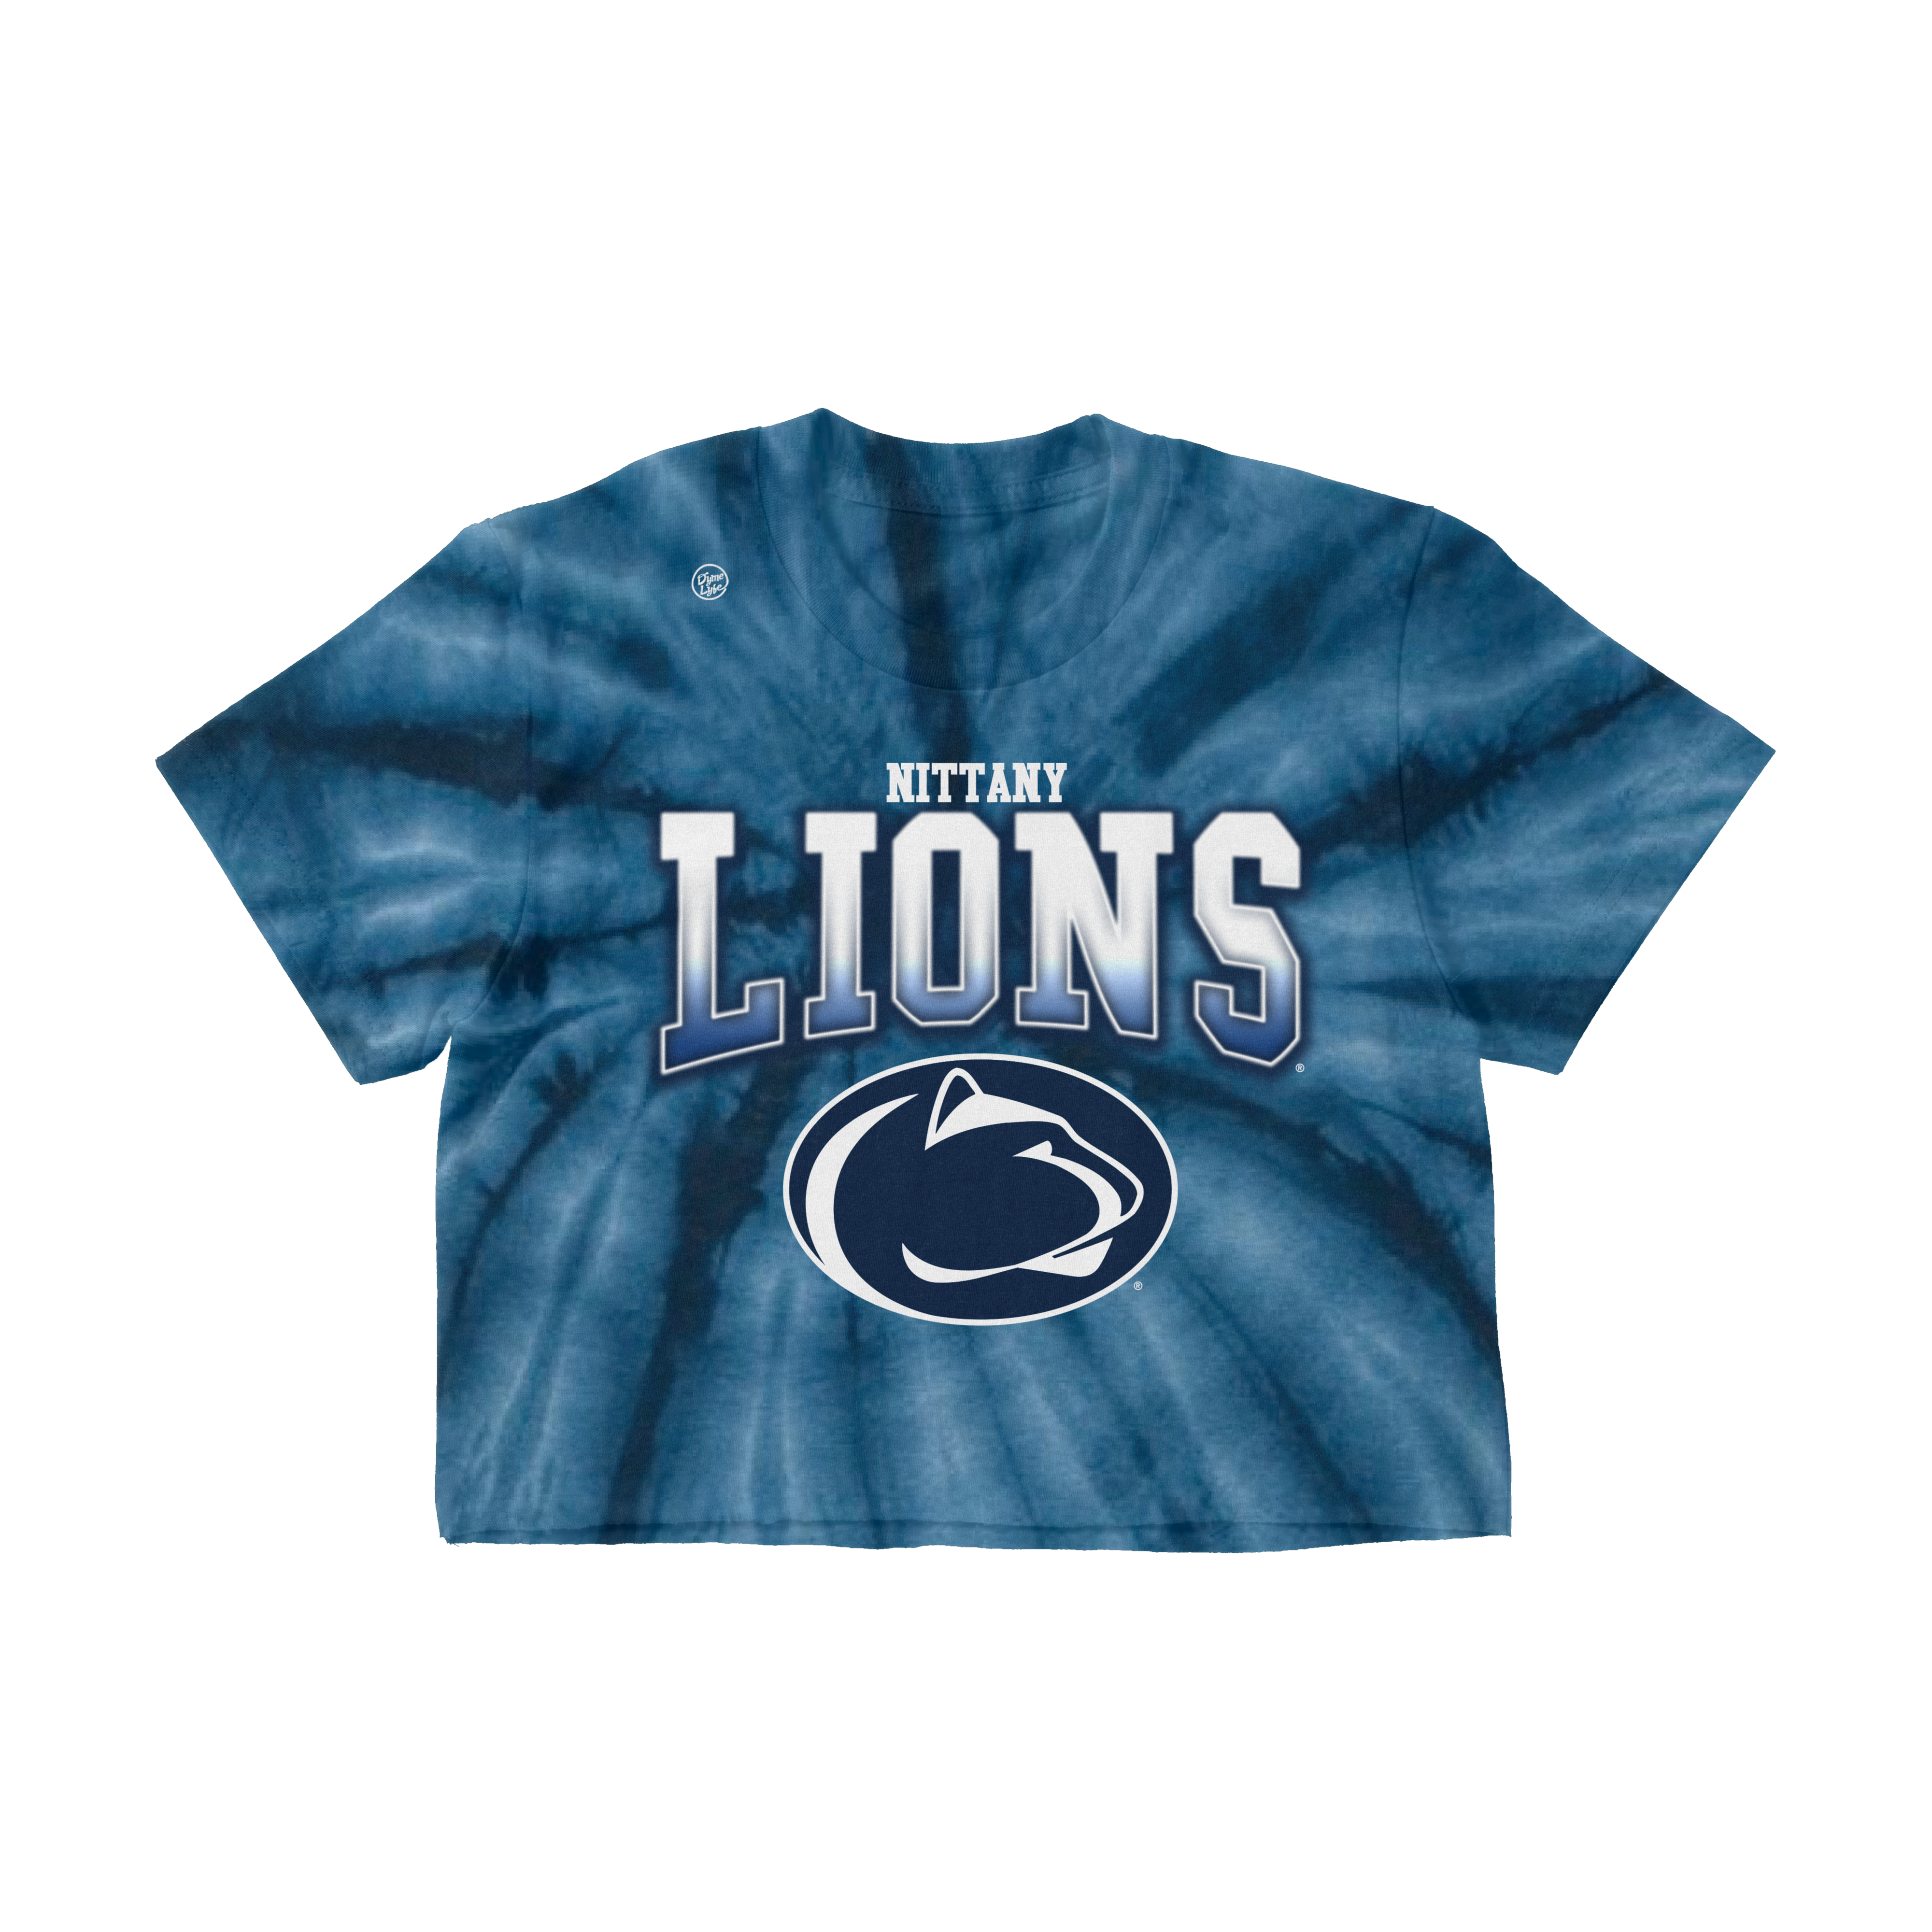 Penn State Nittany Lions Women’s Tie Dye Team Crop Top